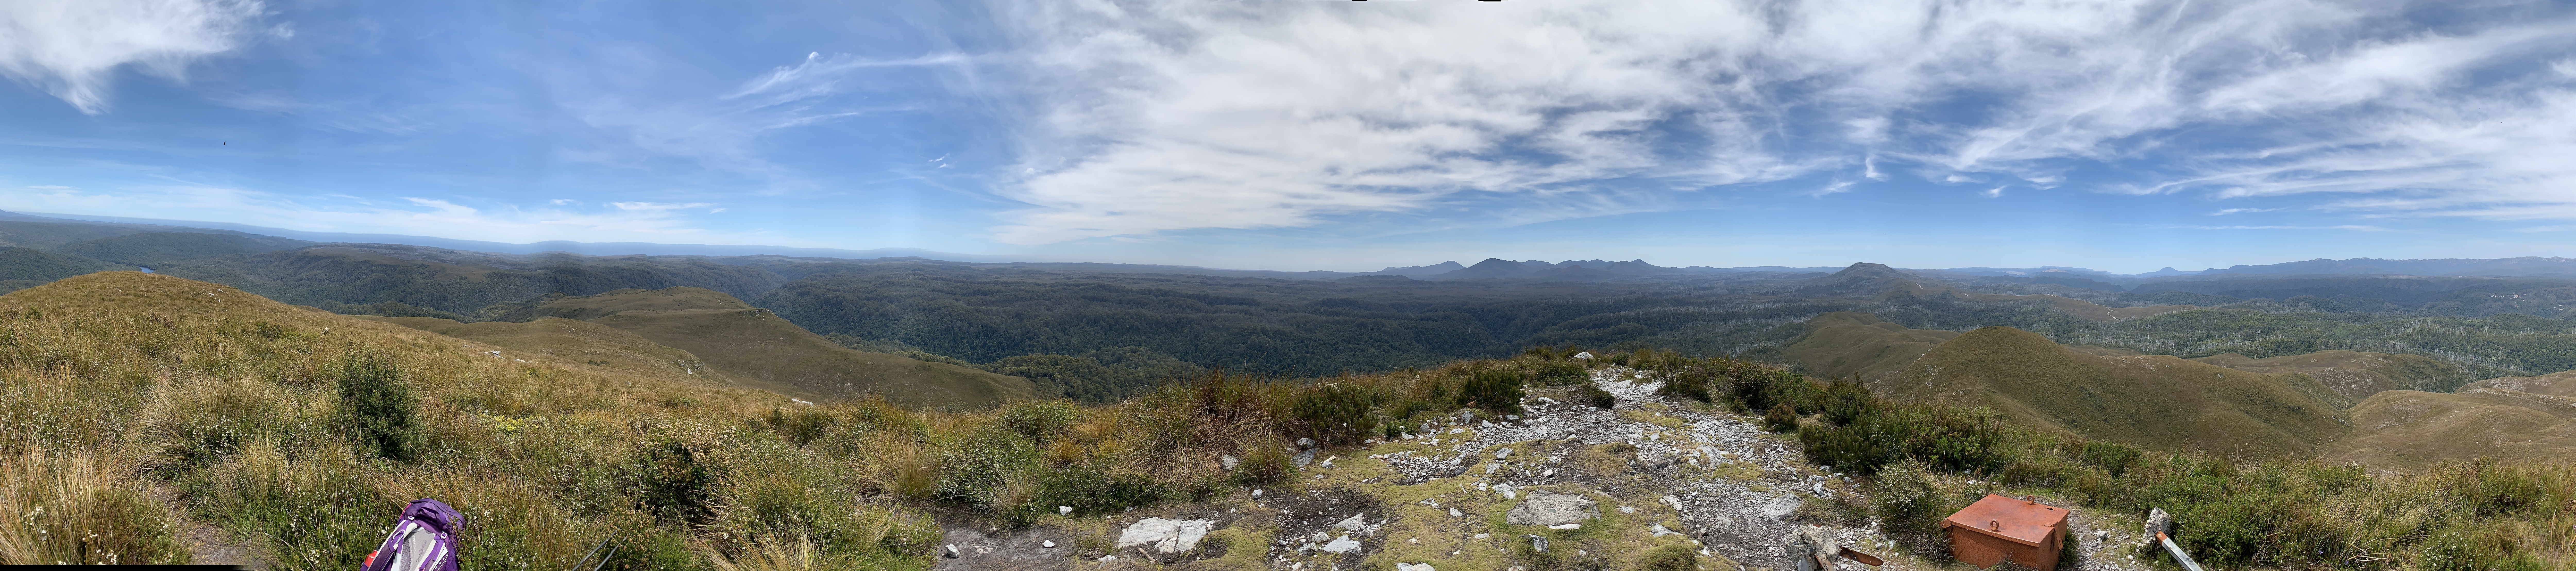 View from Tarkine towards Cradle Mountain